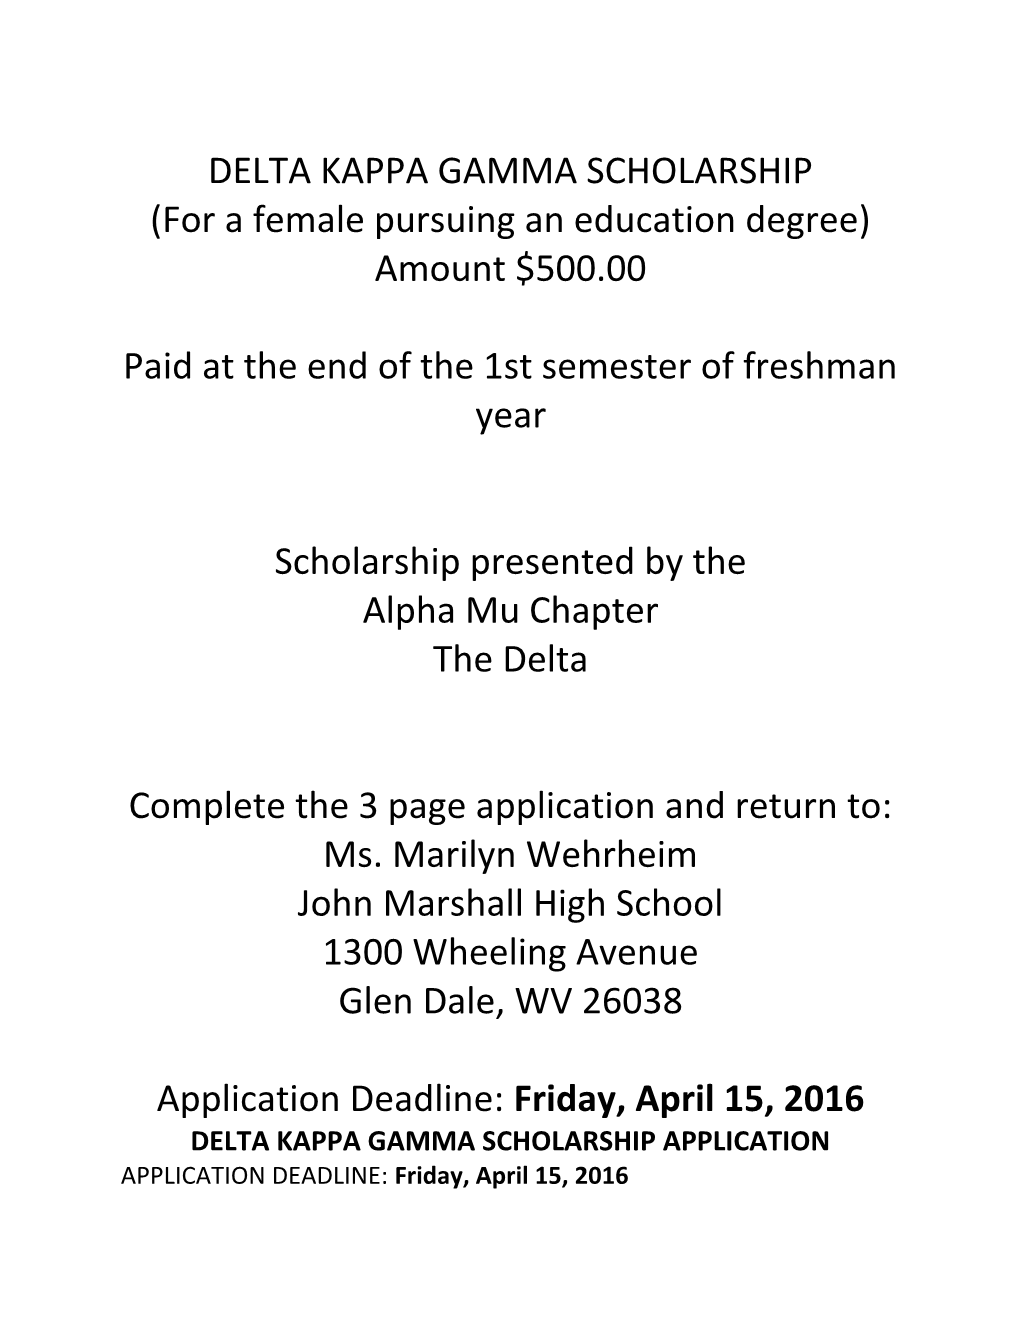 Delta Kappa Gamma Scholarship